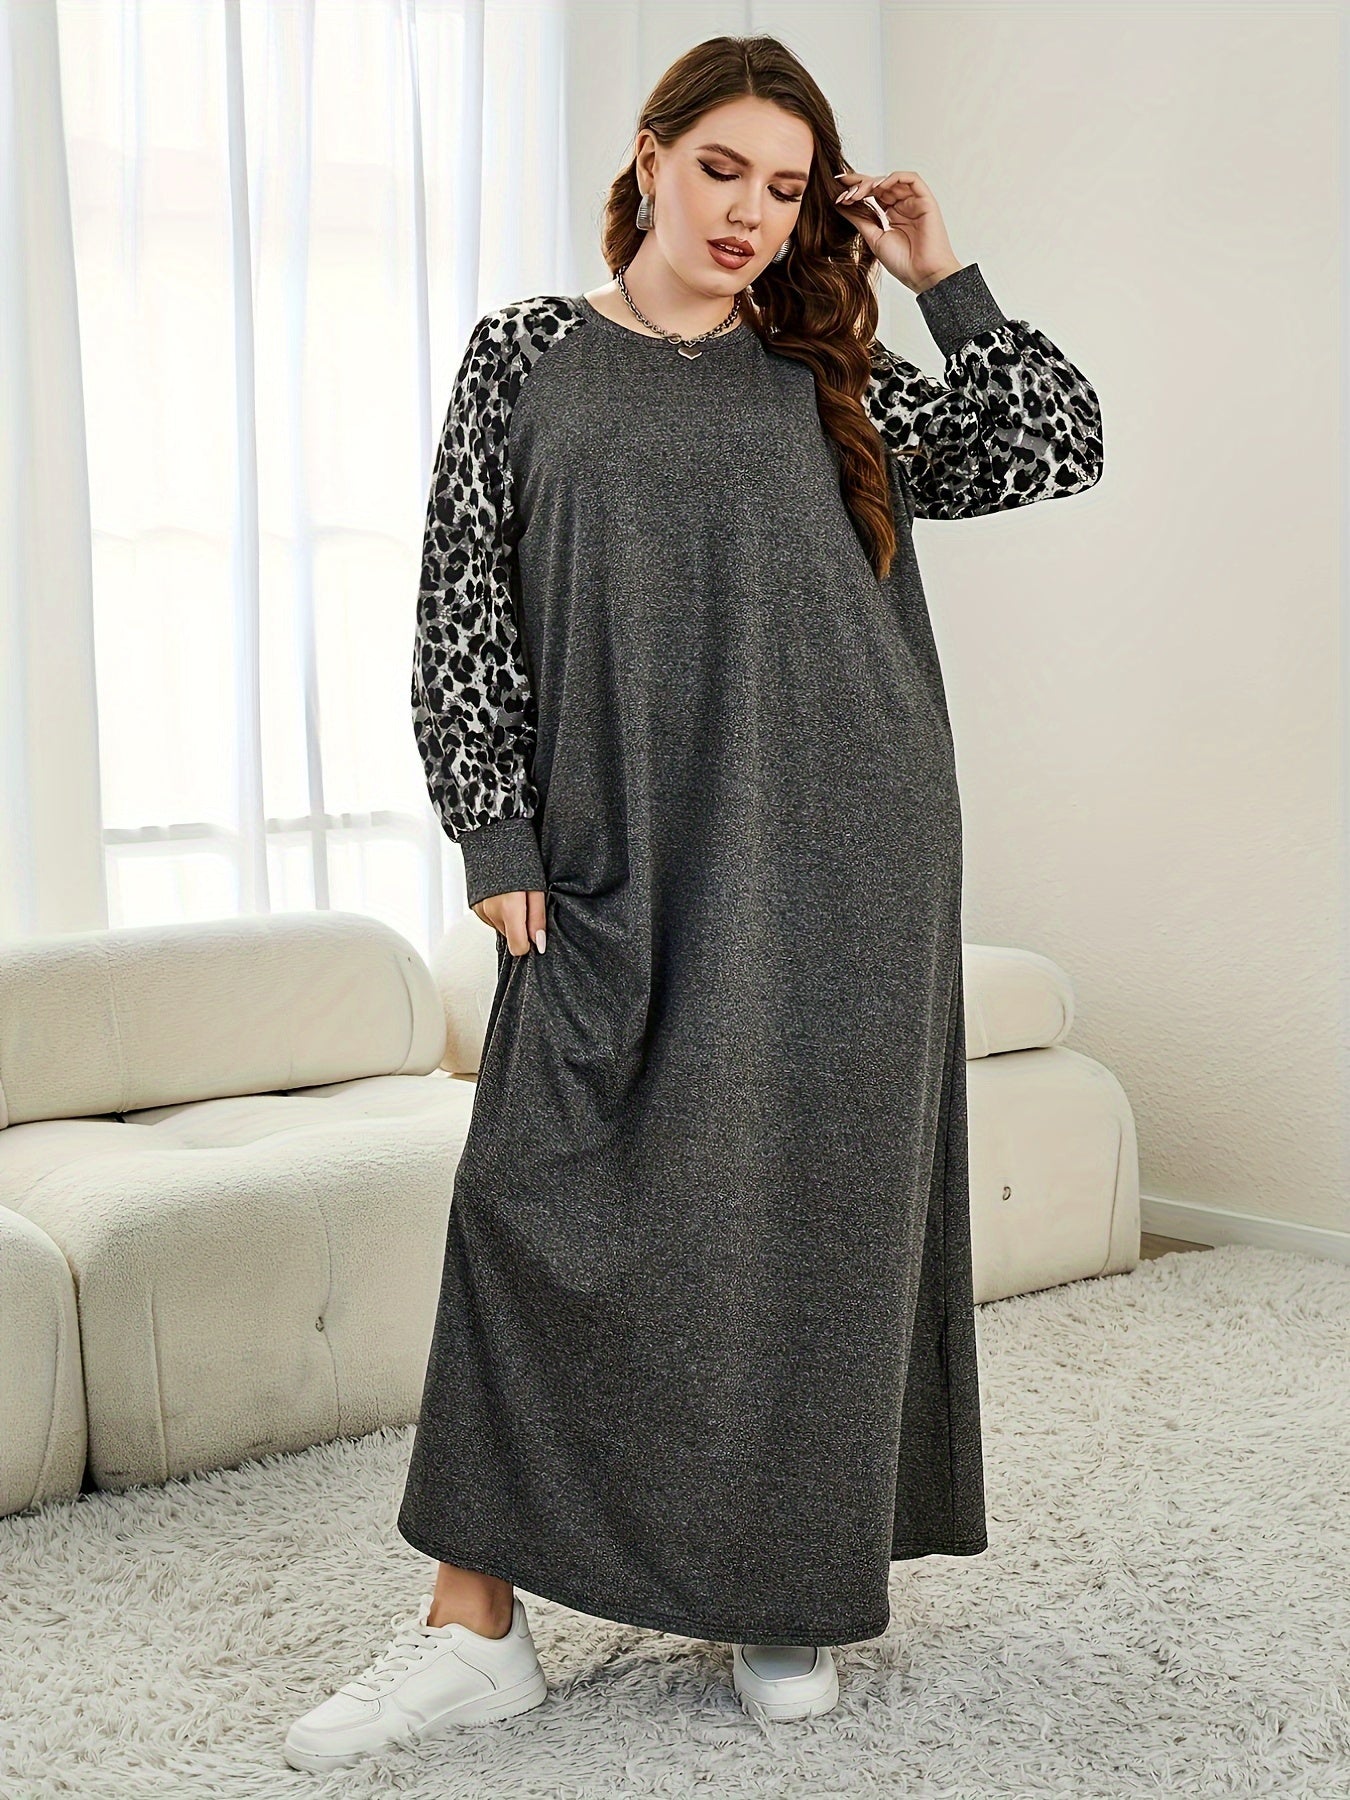 Antmvs Plus Size Casual Dress, Women's Plus Colorblock Leopard Print Lantern Sleeve Round Neck Medium Stretch Maxi Dress